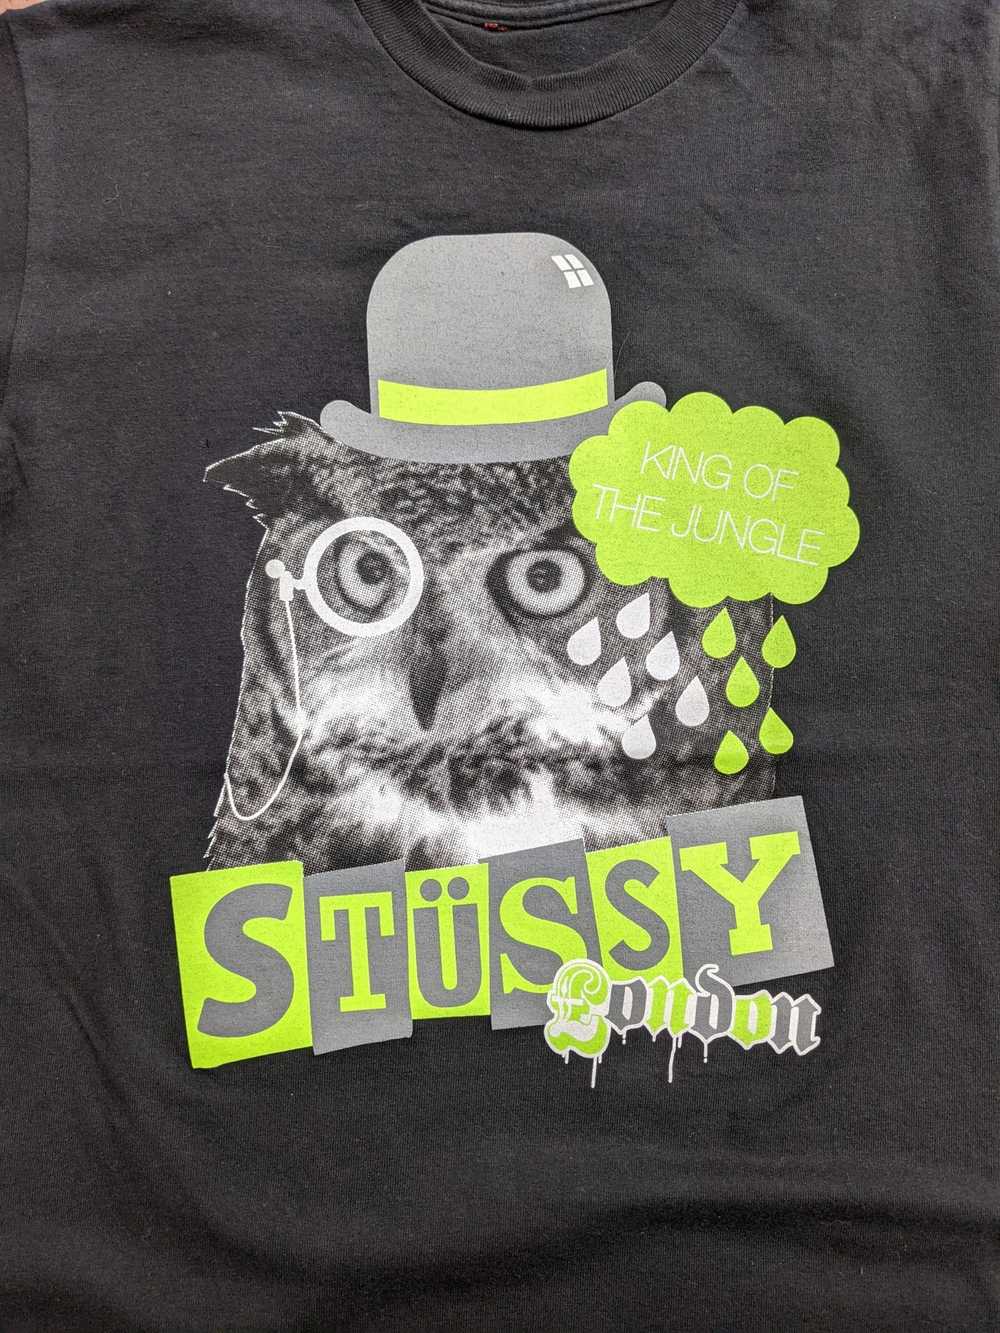 Stussy Stüssy London Owl t-shirt - image 2